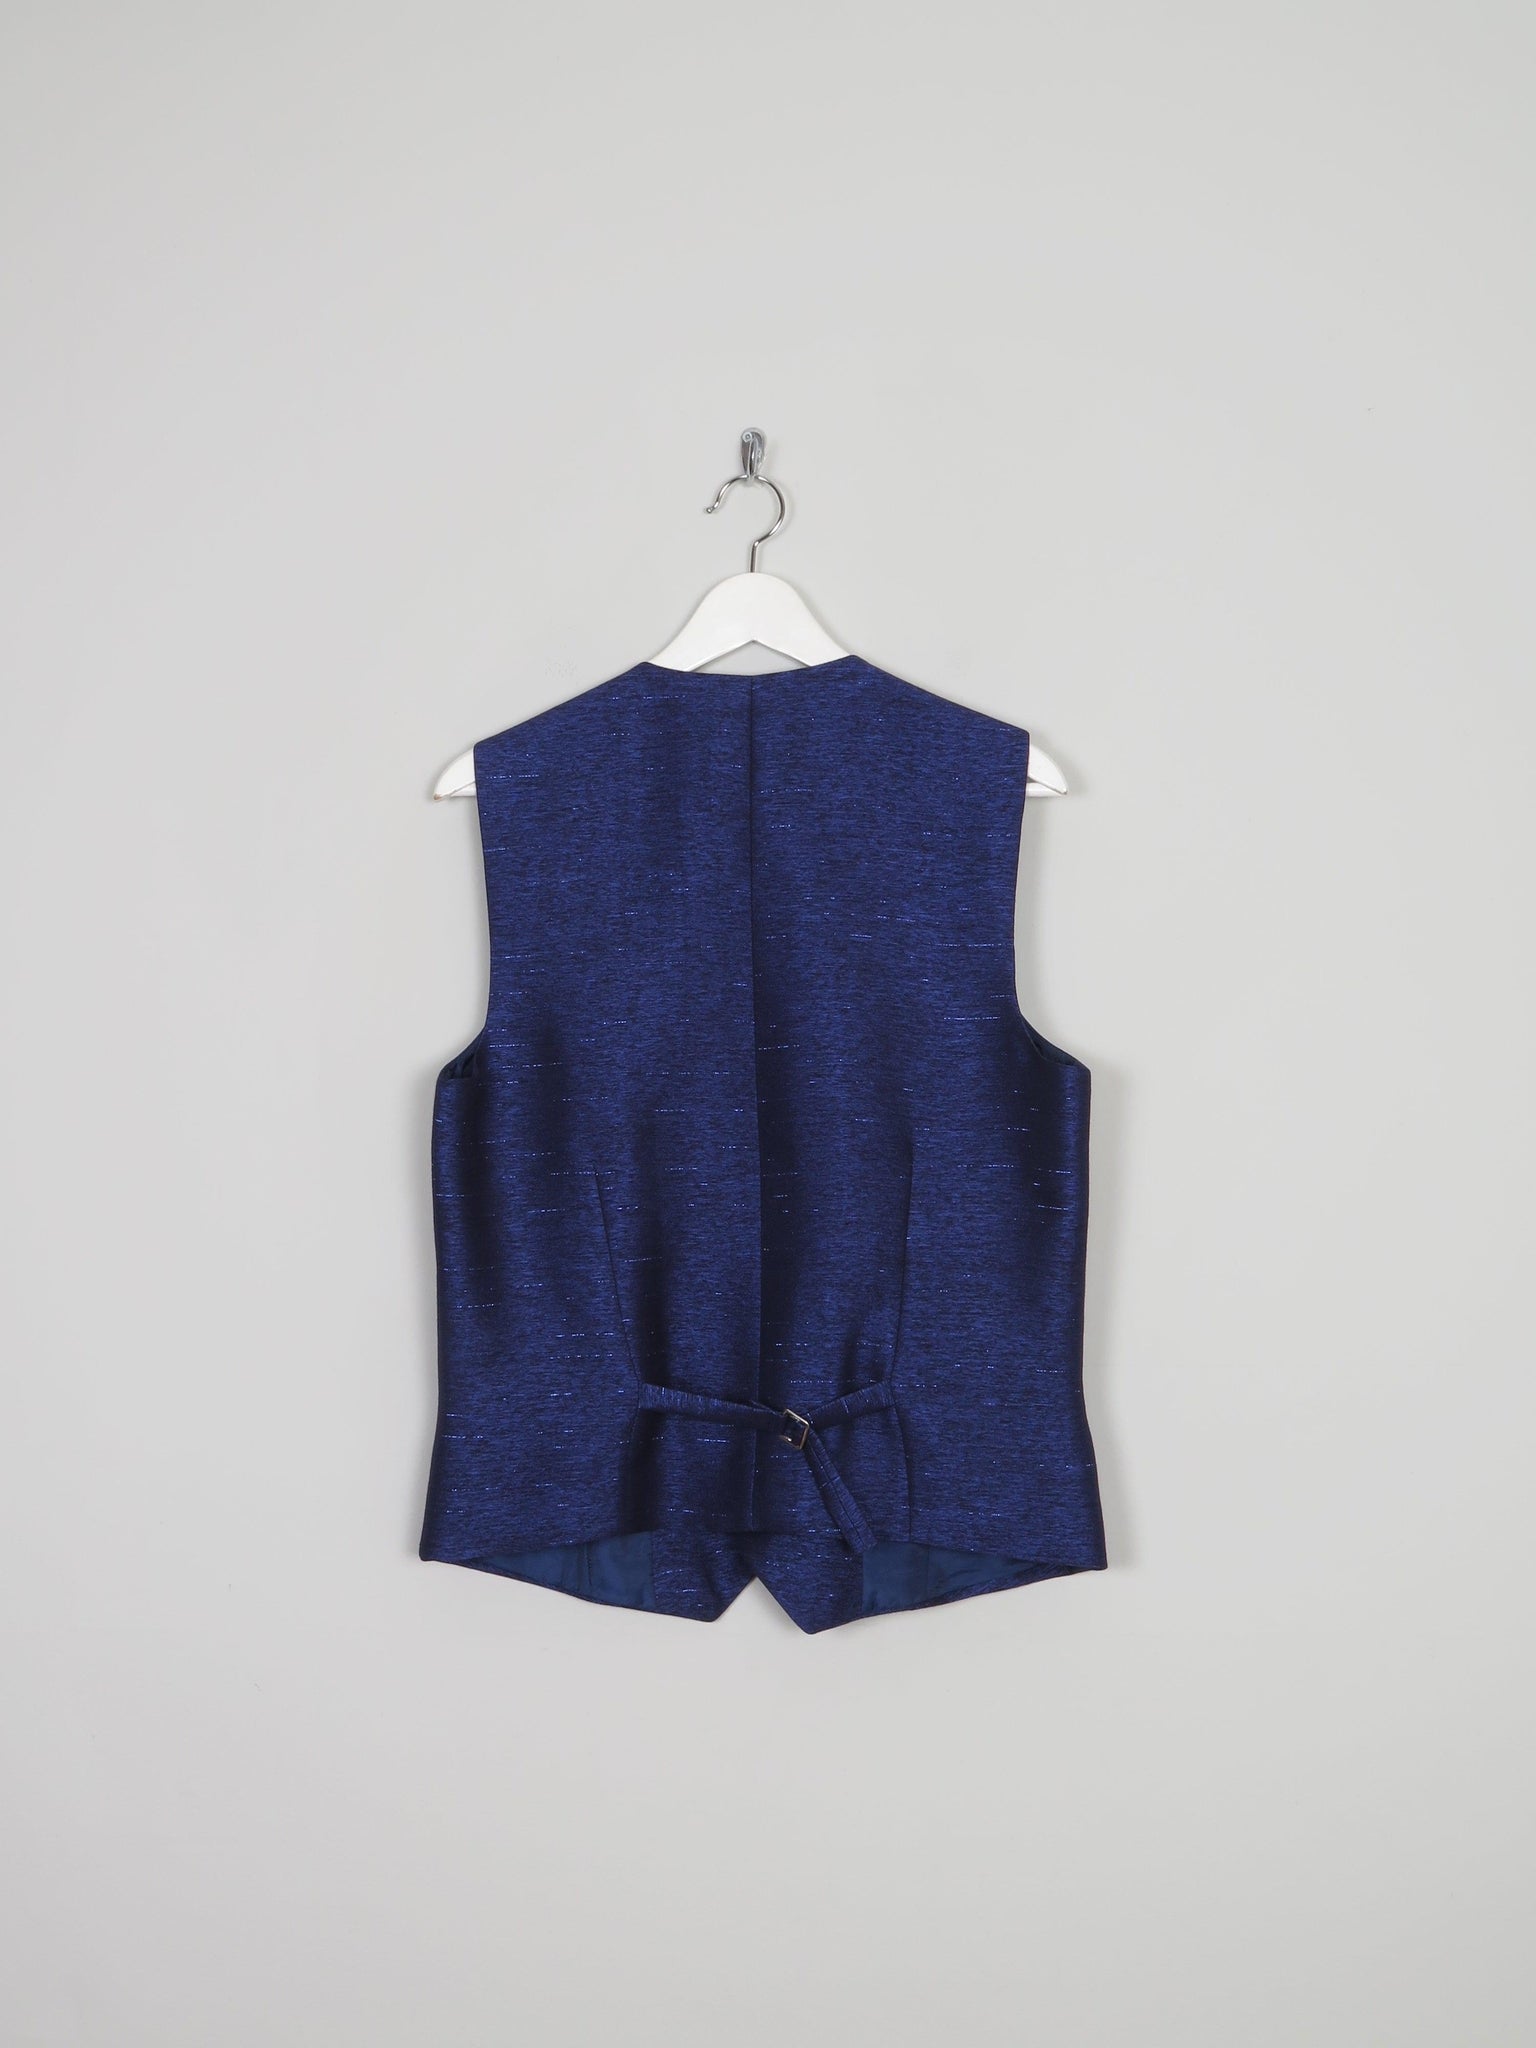 Men's Electric Blue Lurex Waistcoat 38/40 S/M - The Harlequin